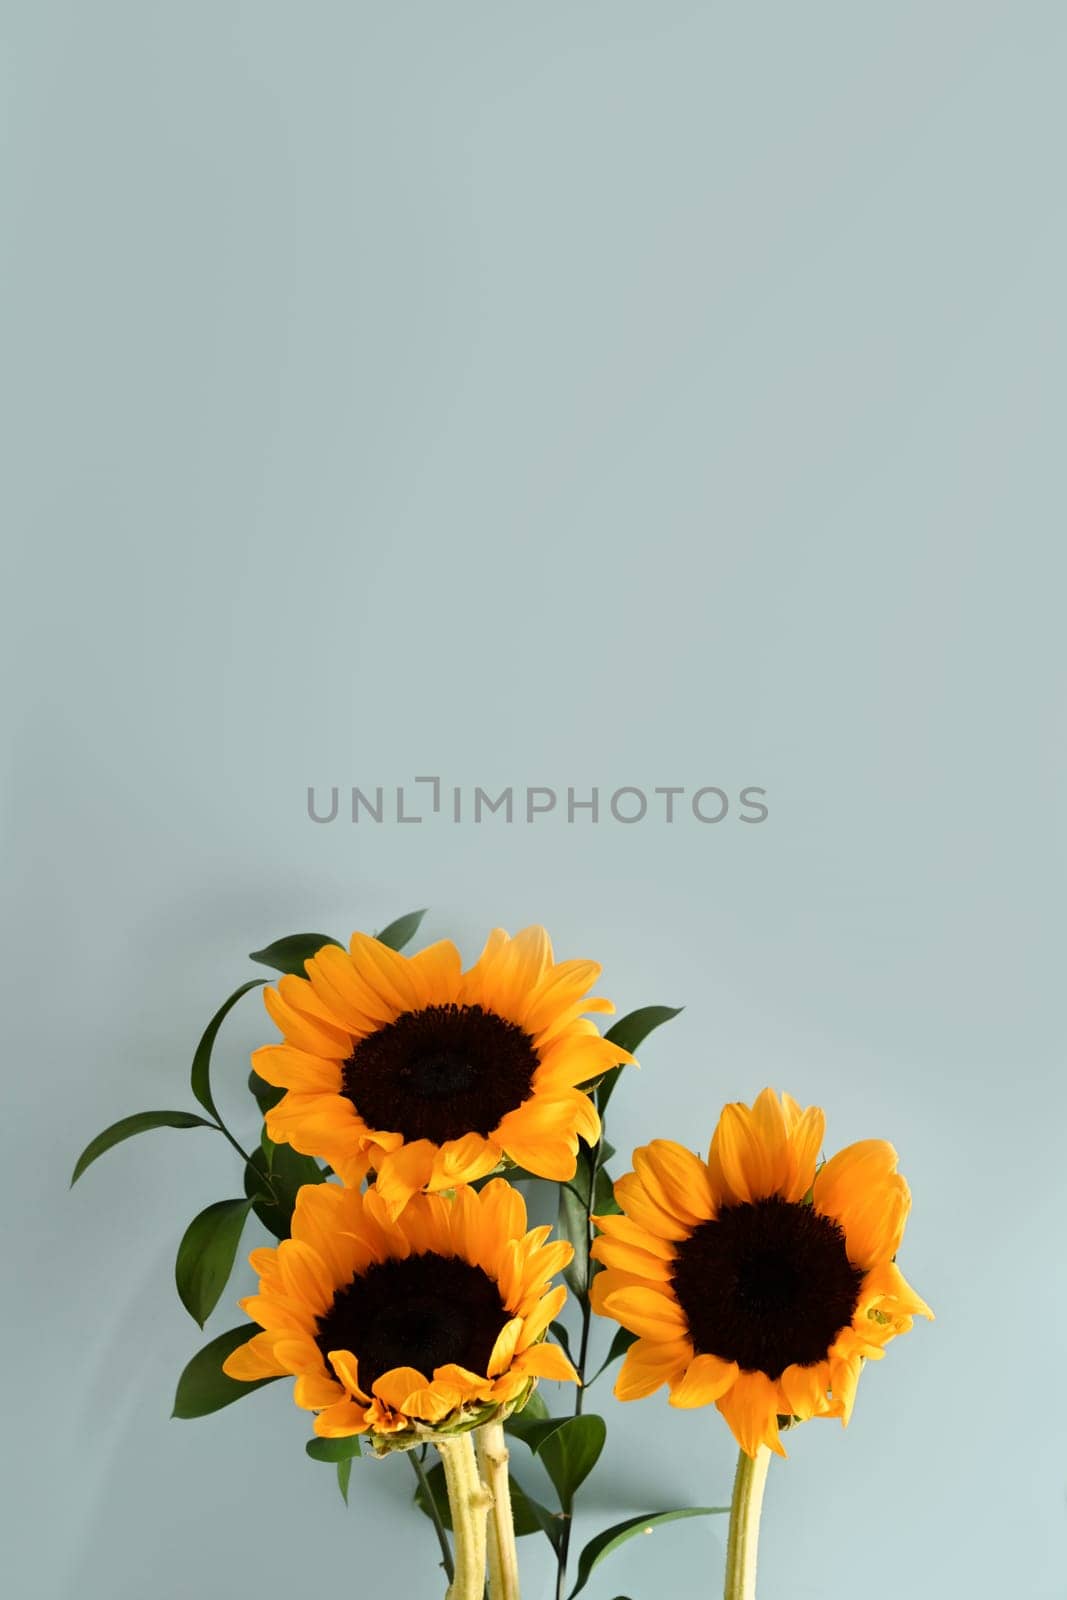 Vertical photo of sunflowers on light blue background. Floral background, autumn or summer concept by prathanchorruangsak